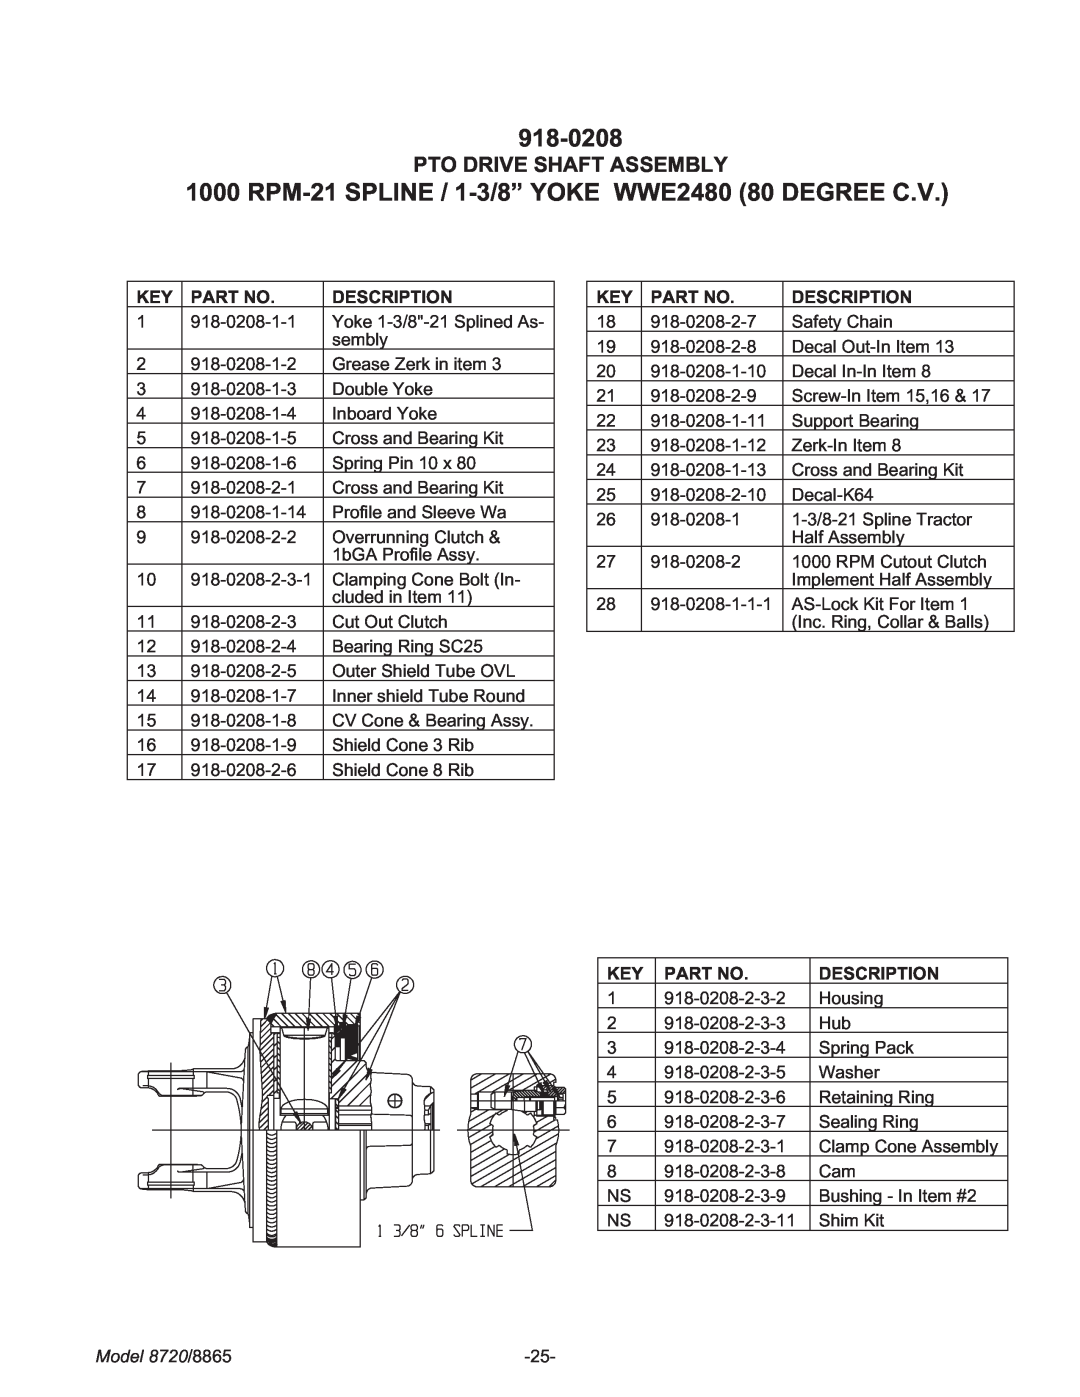 Meyer manual 918-0208, Pto Drive Shaft Assembly, RPM-21 SPLINE / 1-3/8” YOKE WWE2480 80 DEGREE C.V, Model 8720/8865 